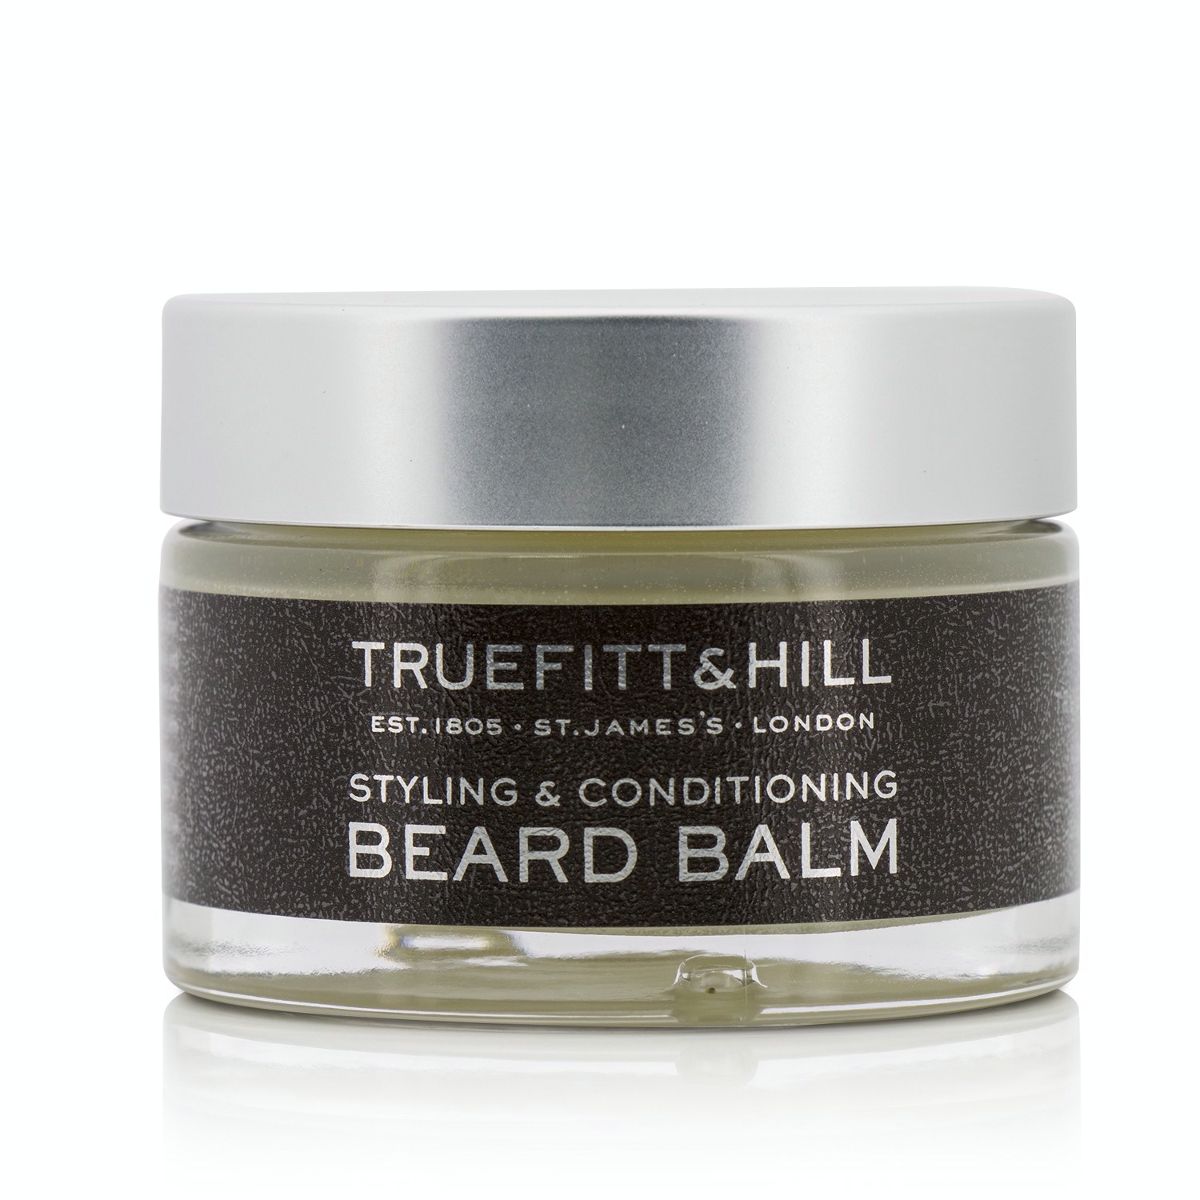 Styling  Conditioning Beard Balm Truefitt & Hill Image